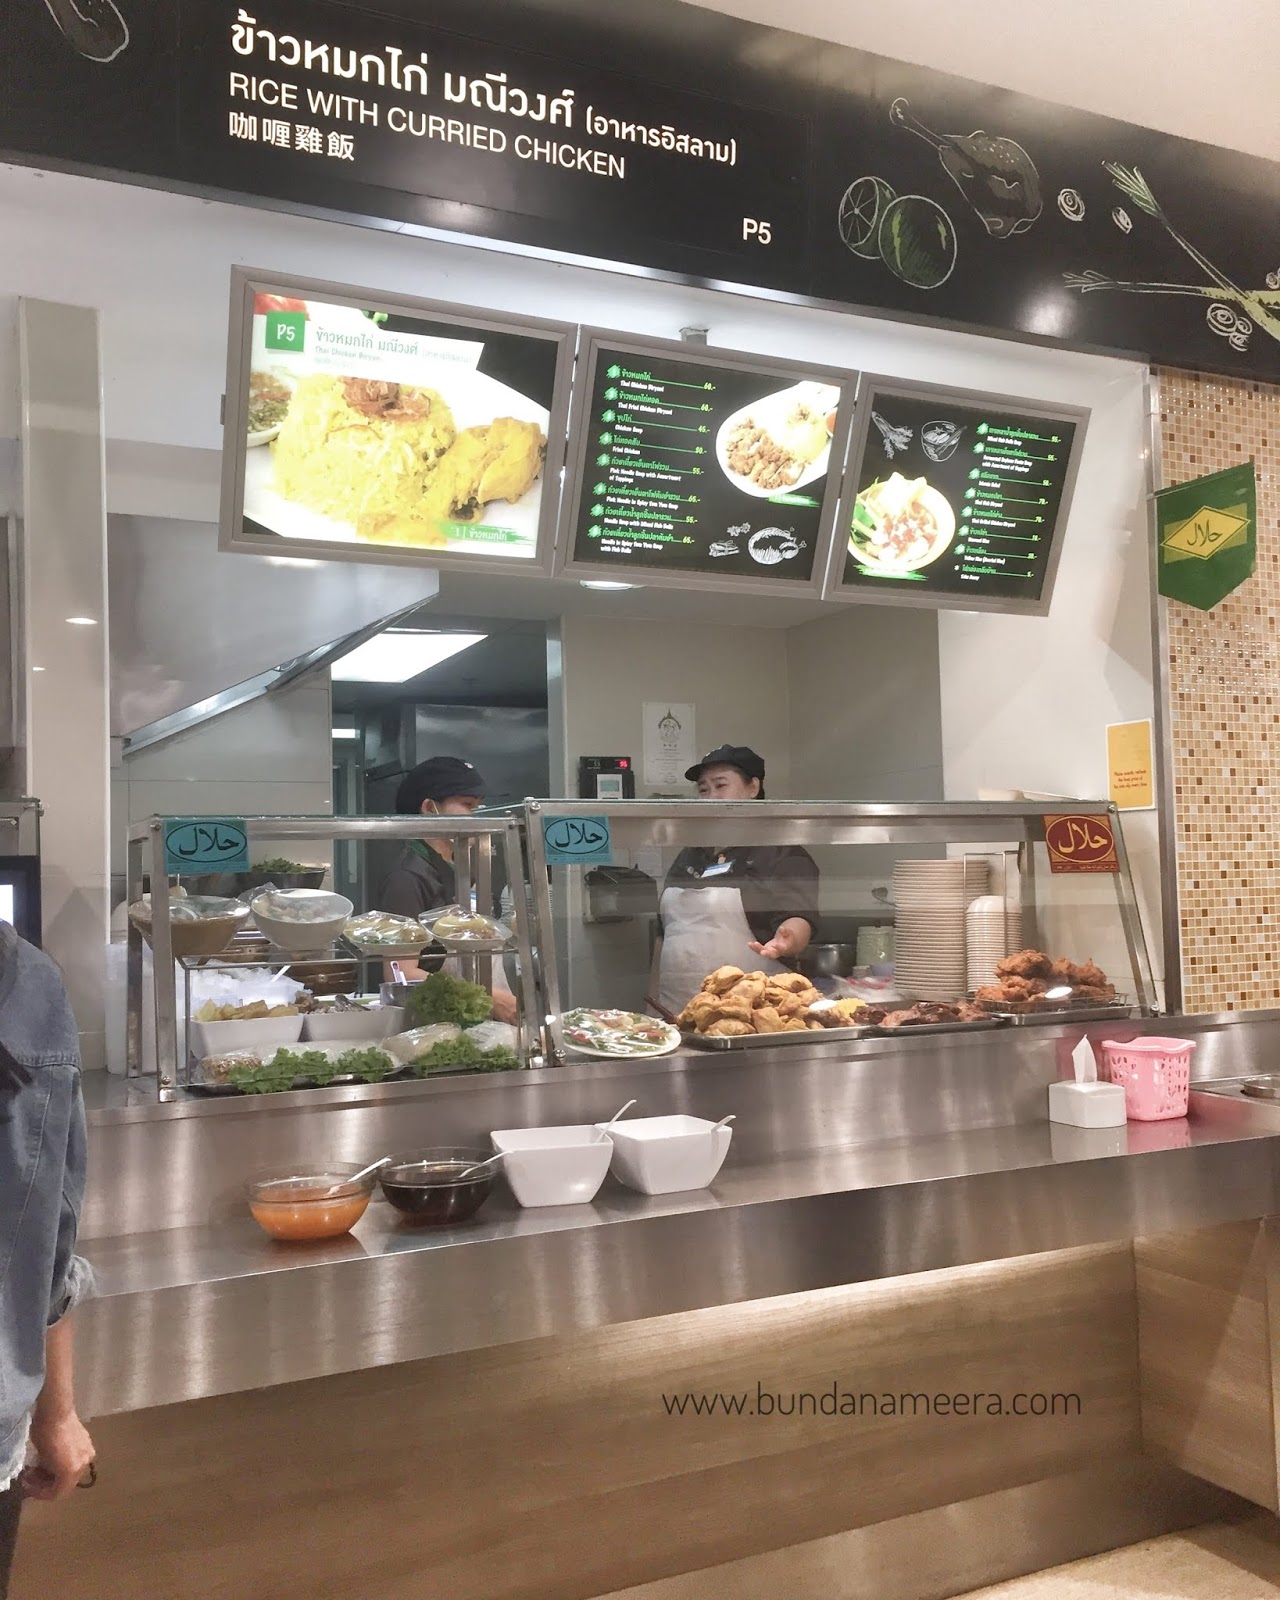 Restoran halal di Thailand, makanan halal yang ada di Bangkok, rekomendasi pilihan makanan halal di Bangkok, pengalaman mencari makanan halal di Bangkok